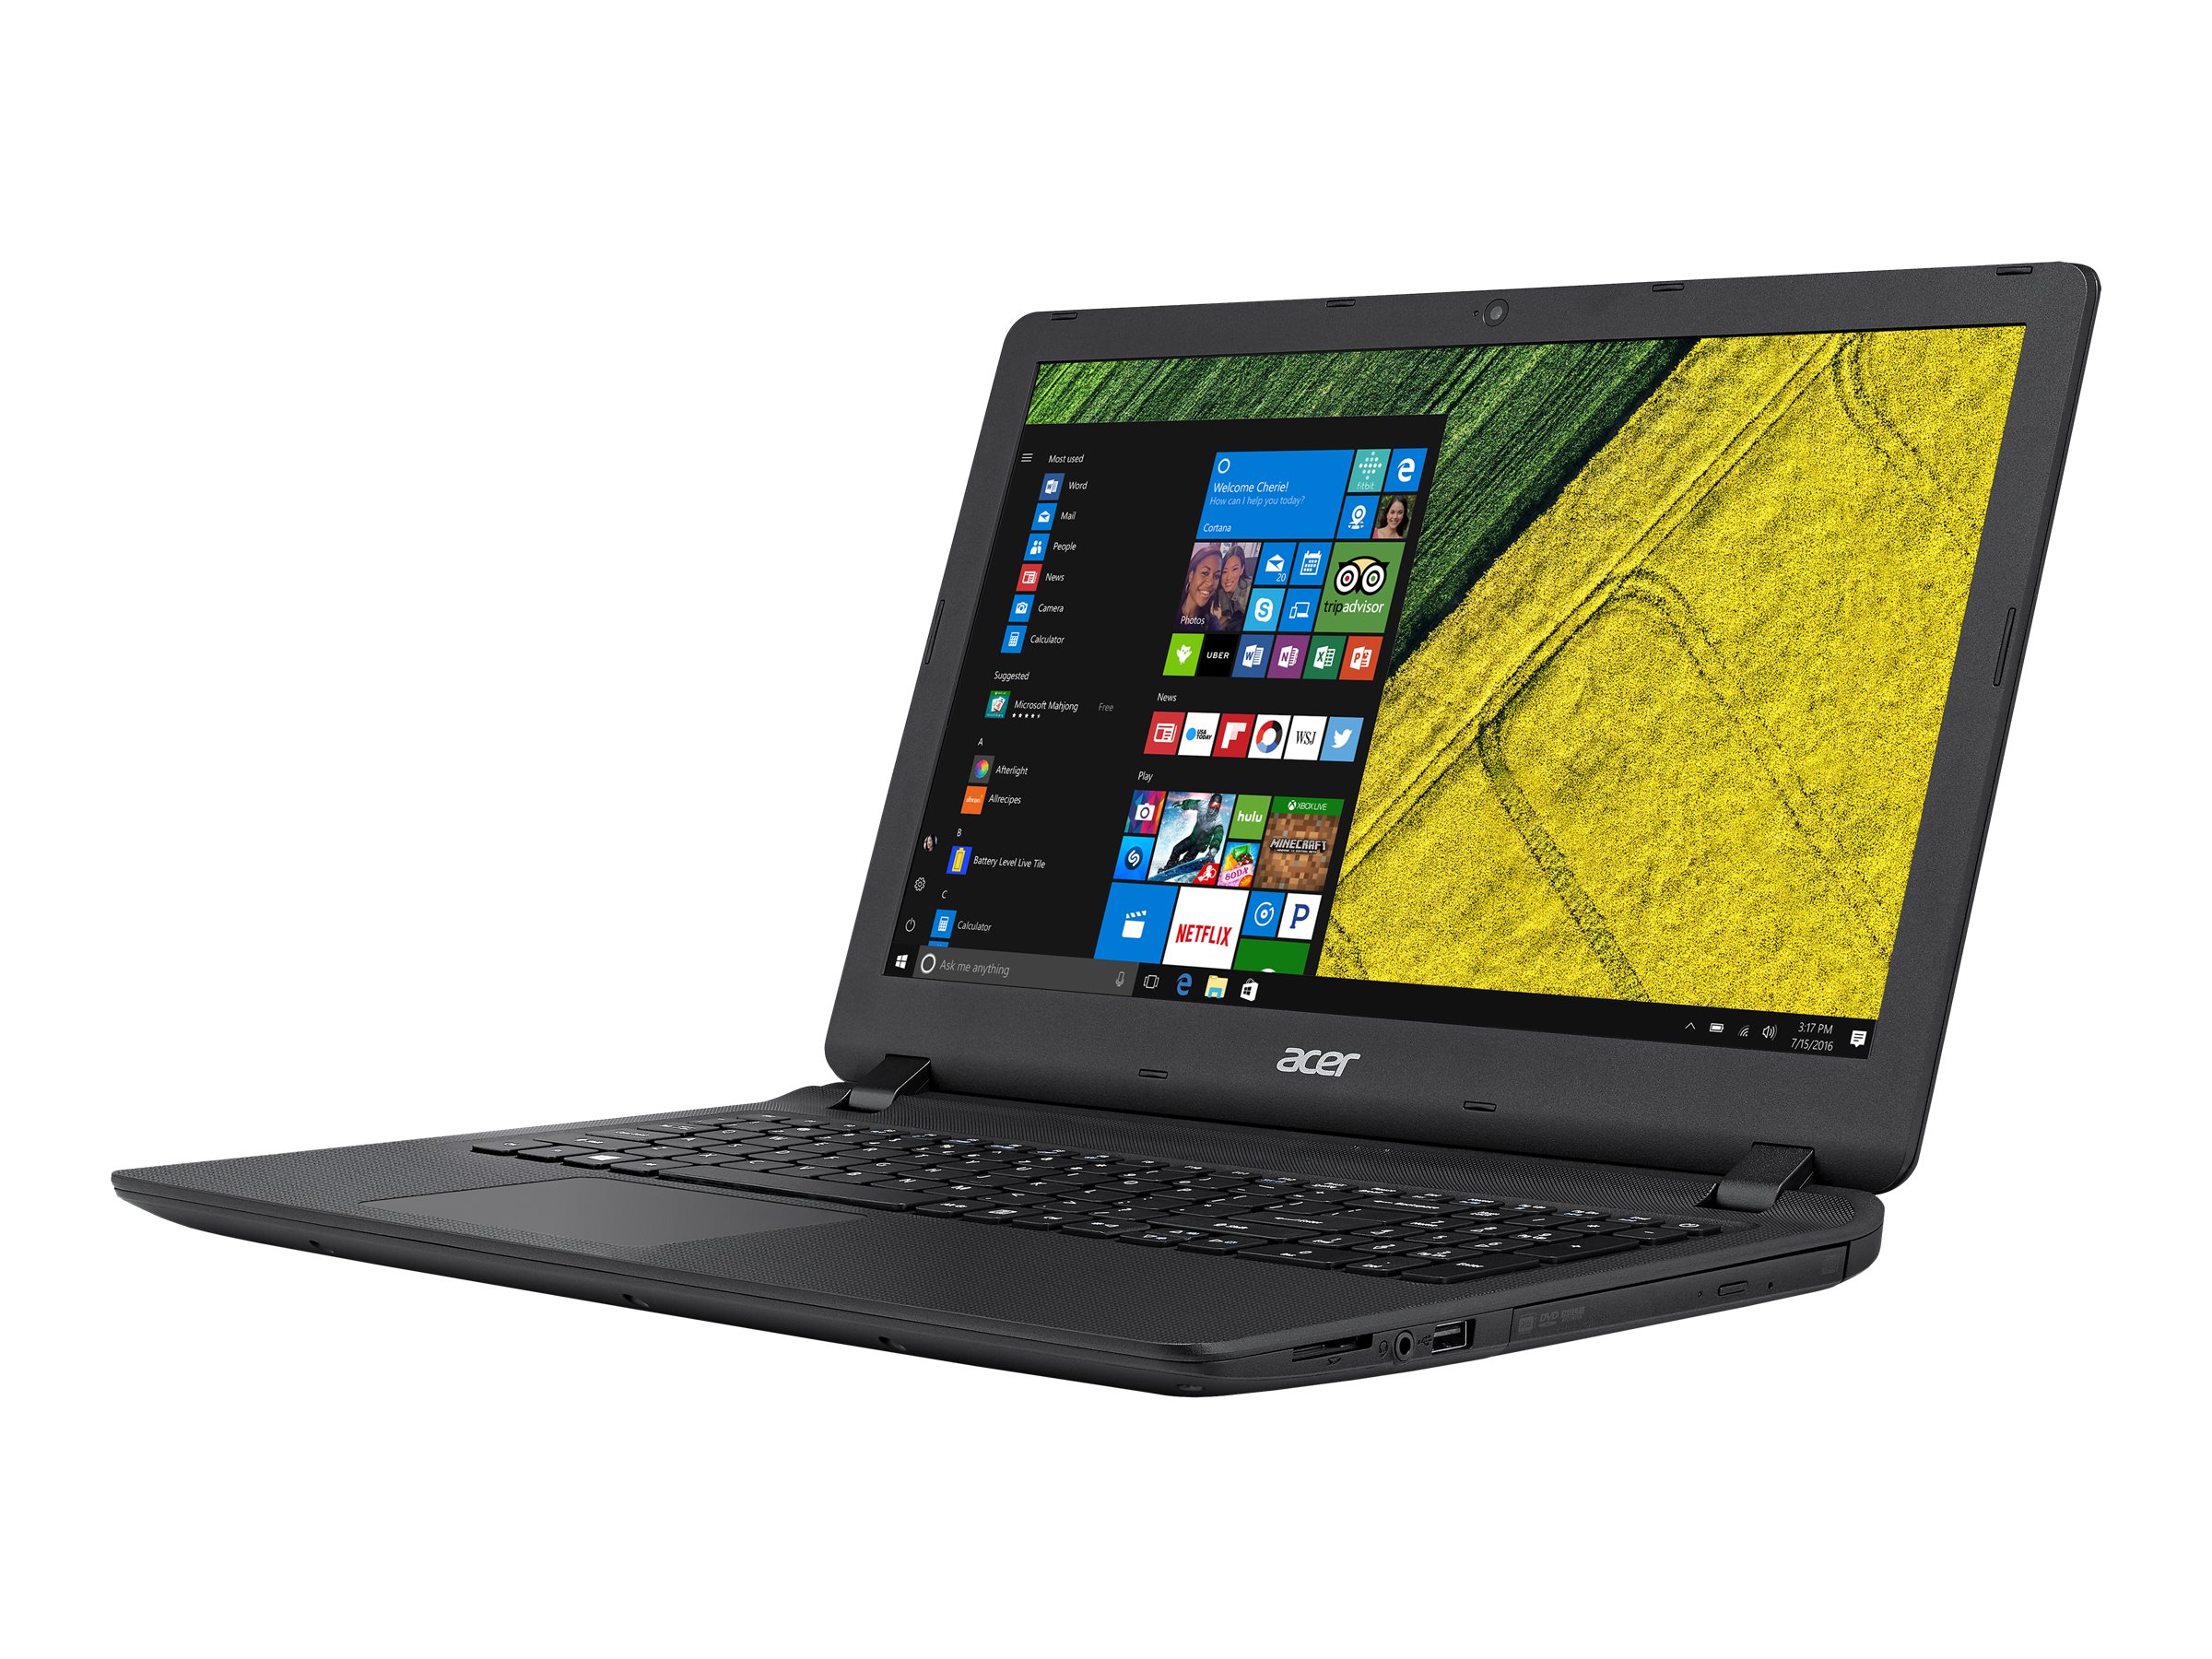 Acer Aspire 15.6" Laptop, Intel Celeron N3350, 500GB HD, DVD Writer, Windows 10 Home, ES1-533-C3VD - image 1 of 7